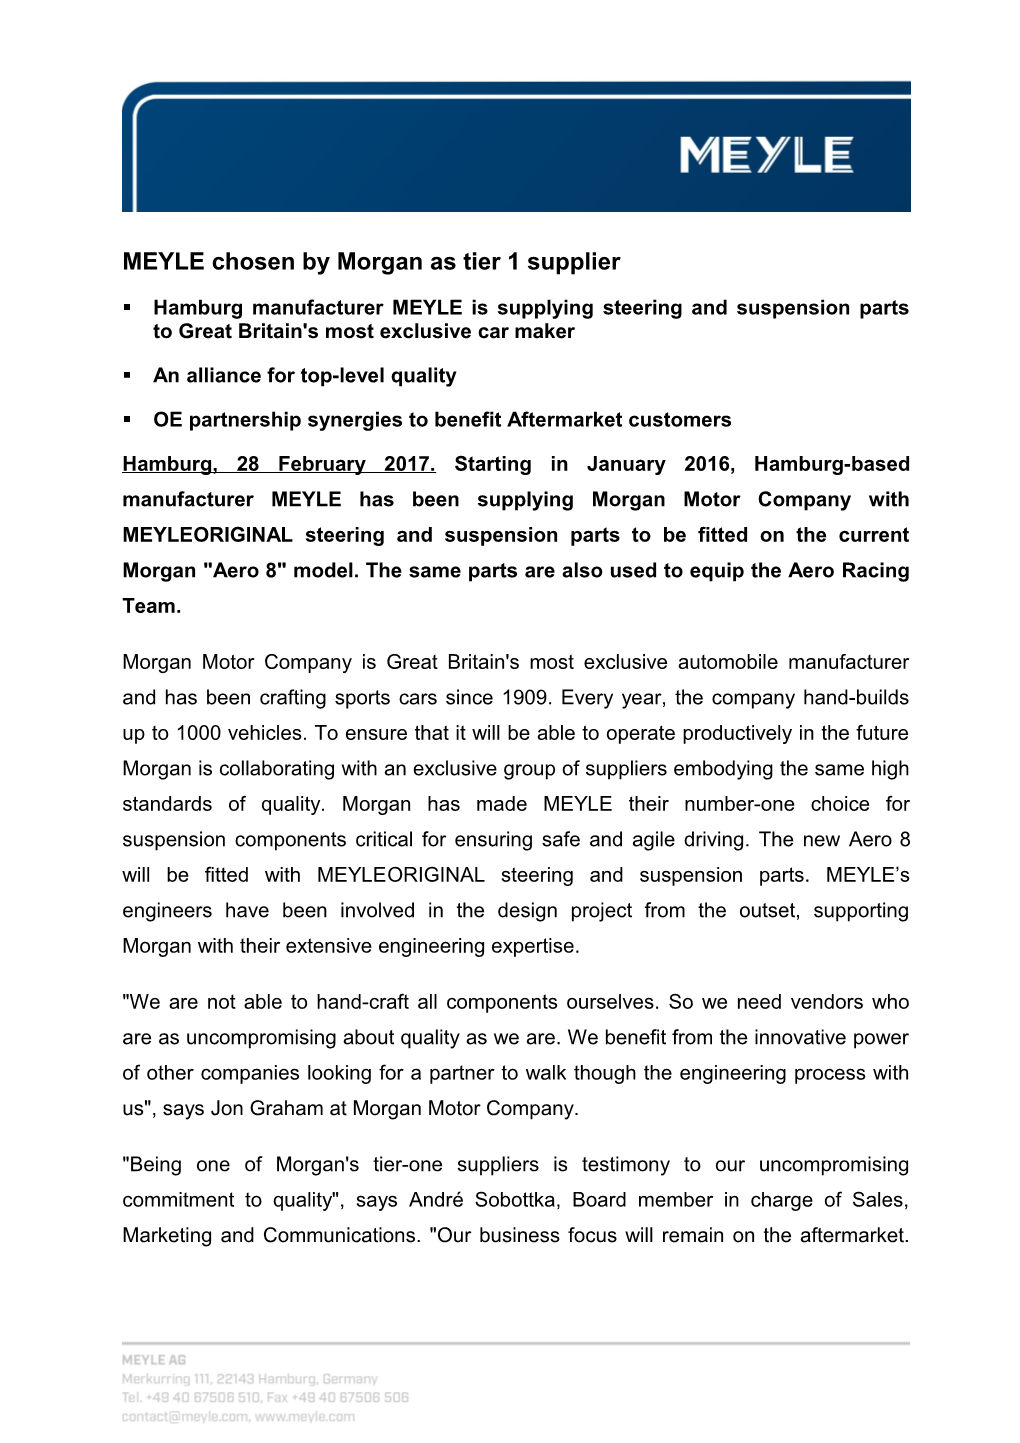 MEYLE Chosenby Morgan Astier 1 Supplier